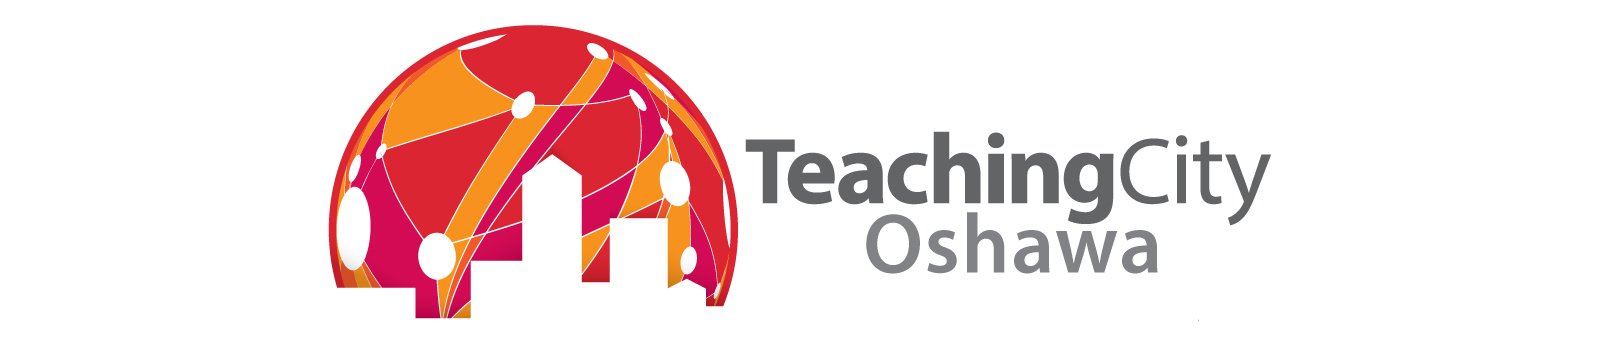 TeachingCity Oshawa logo